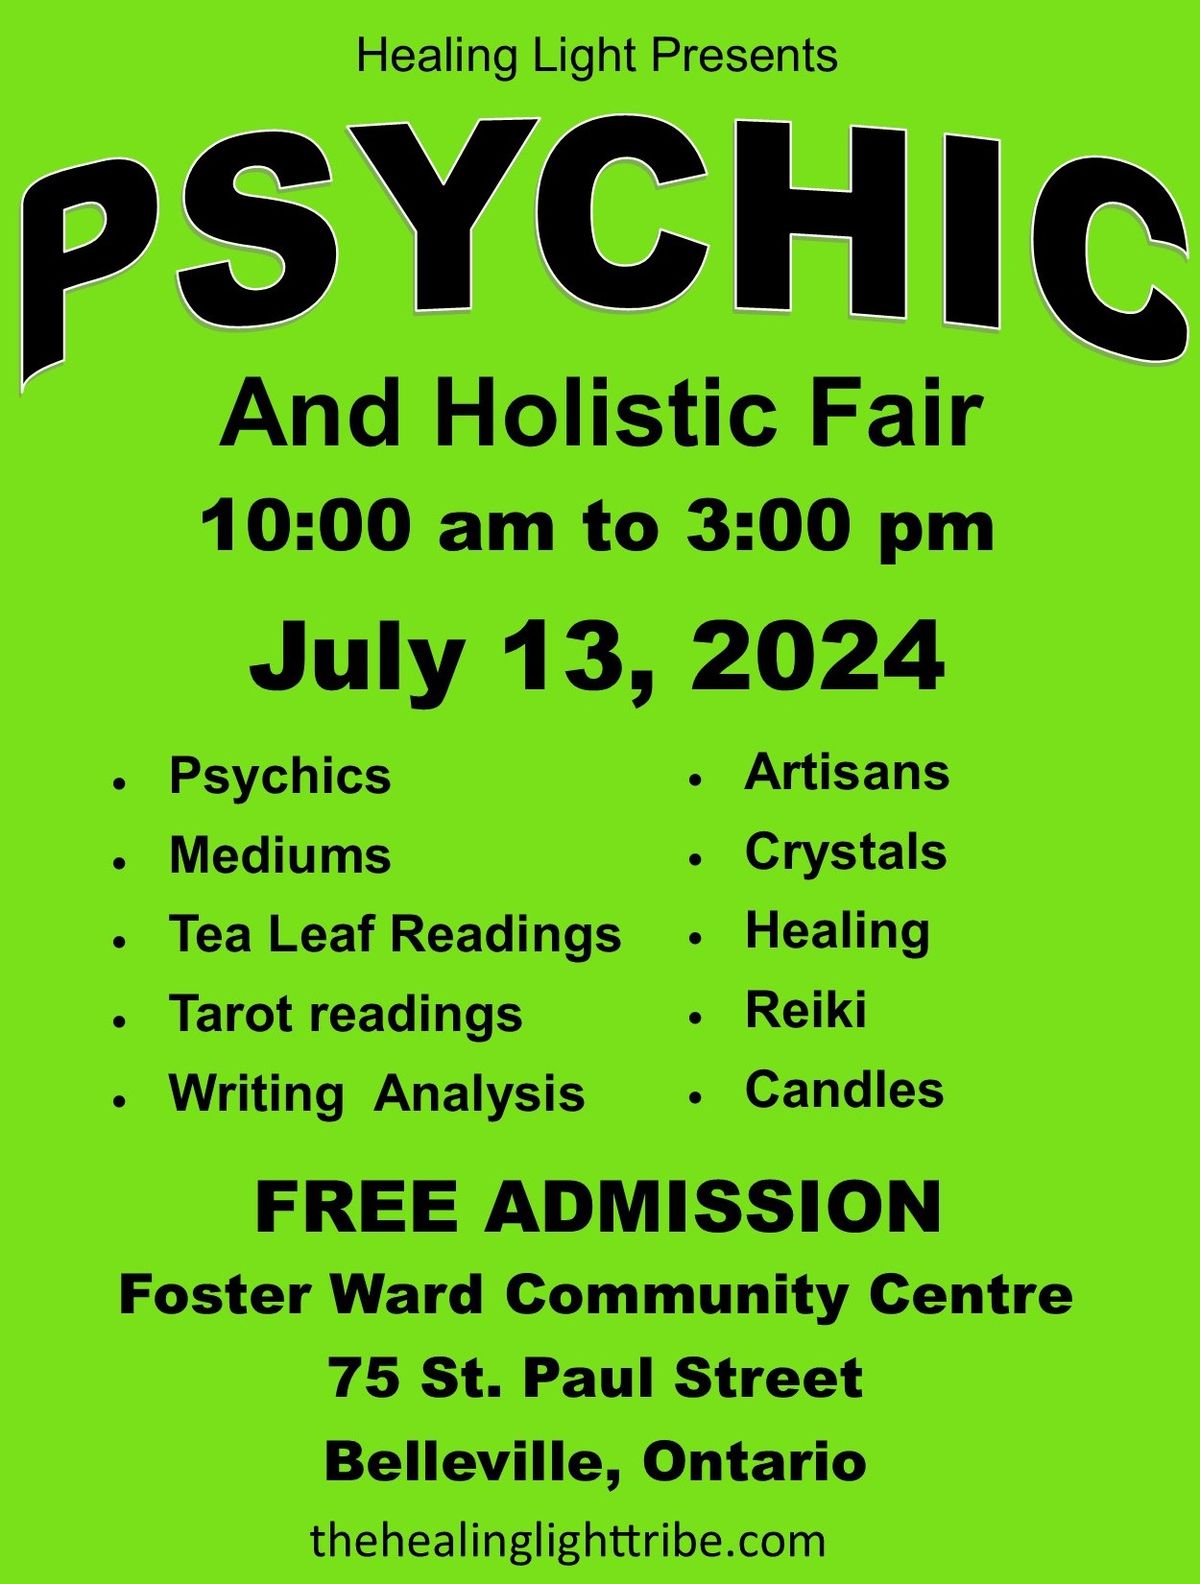 Psychic and Holistic Fair 